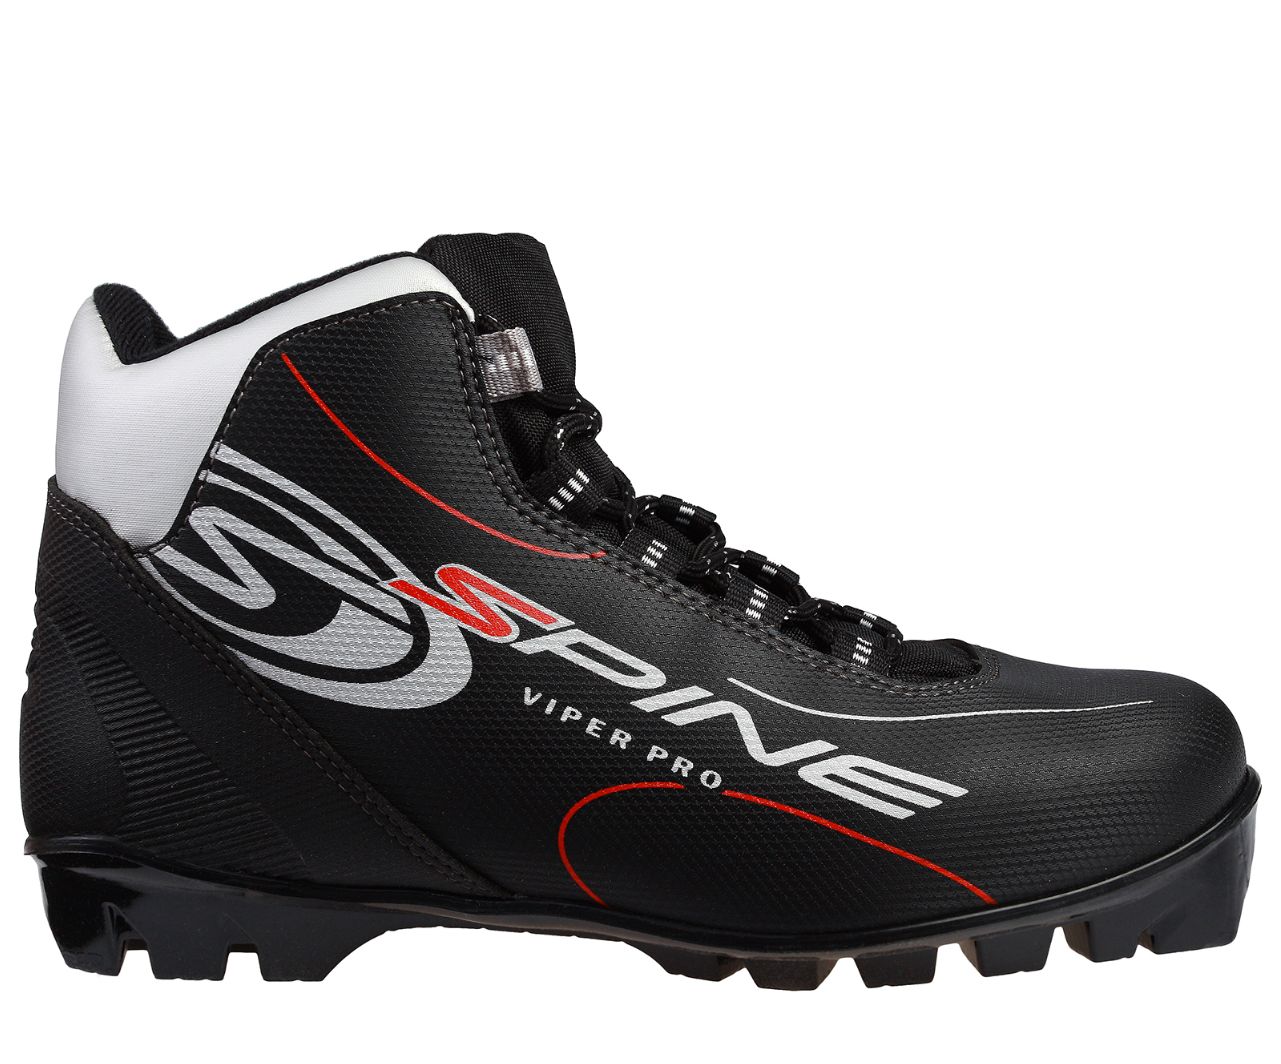 Лыжные ботинки SPINE NNN Viper (251) (черный) (35)